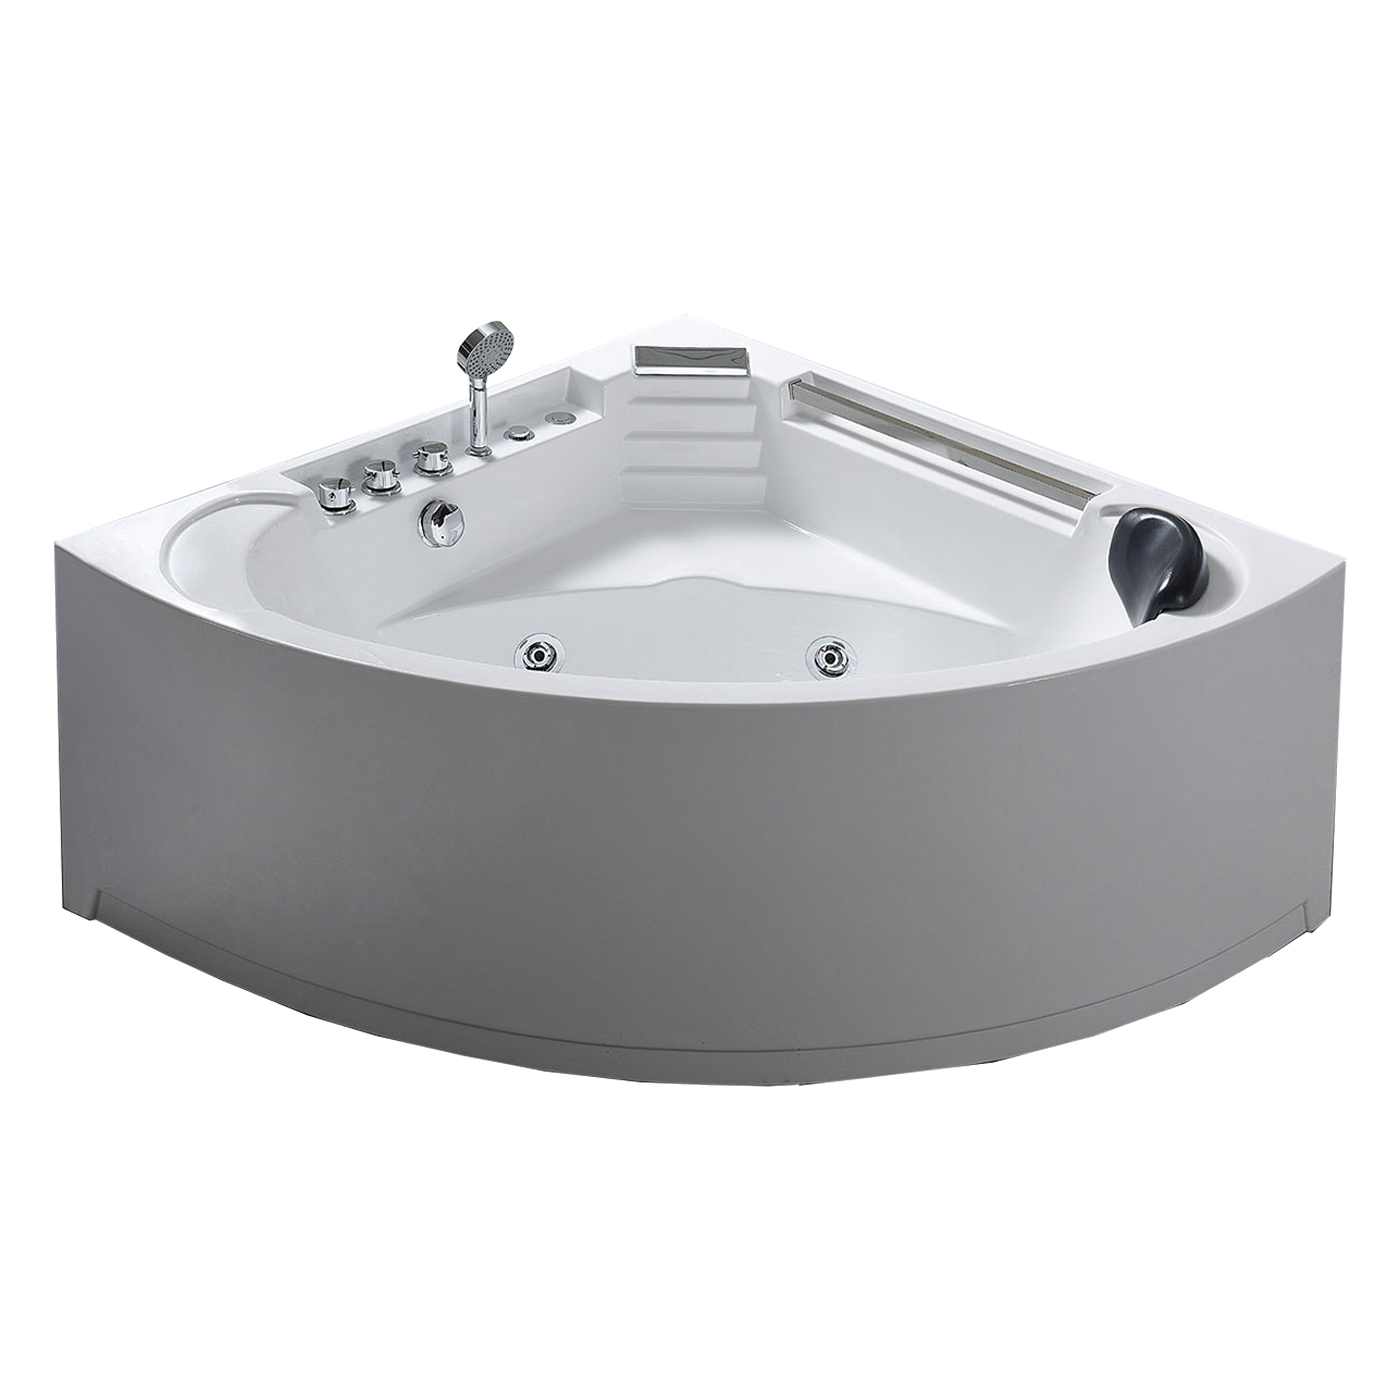 Whirlpool Bathtub 53 15 X Hot, Water Jets For Bathtub